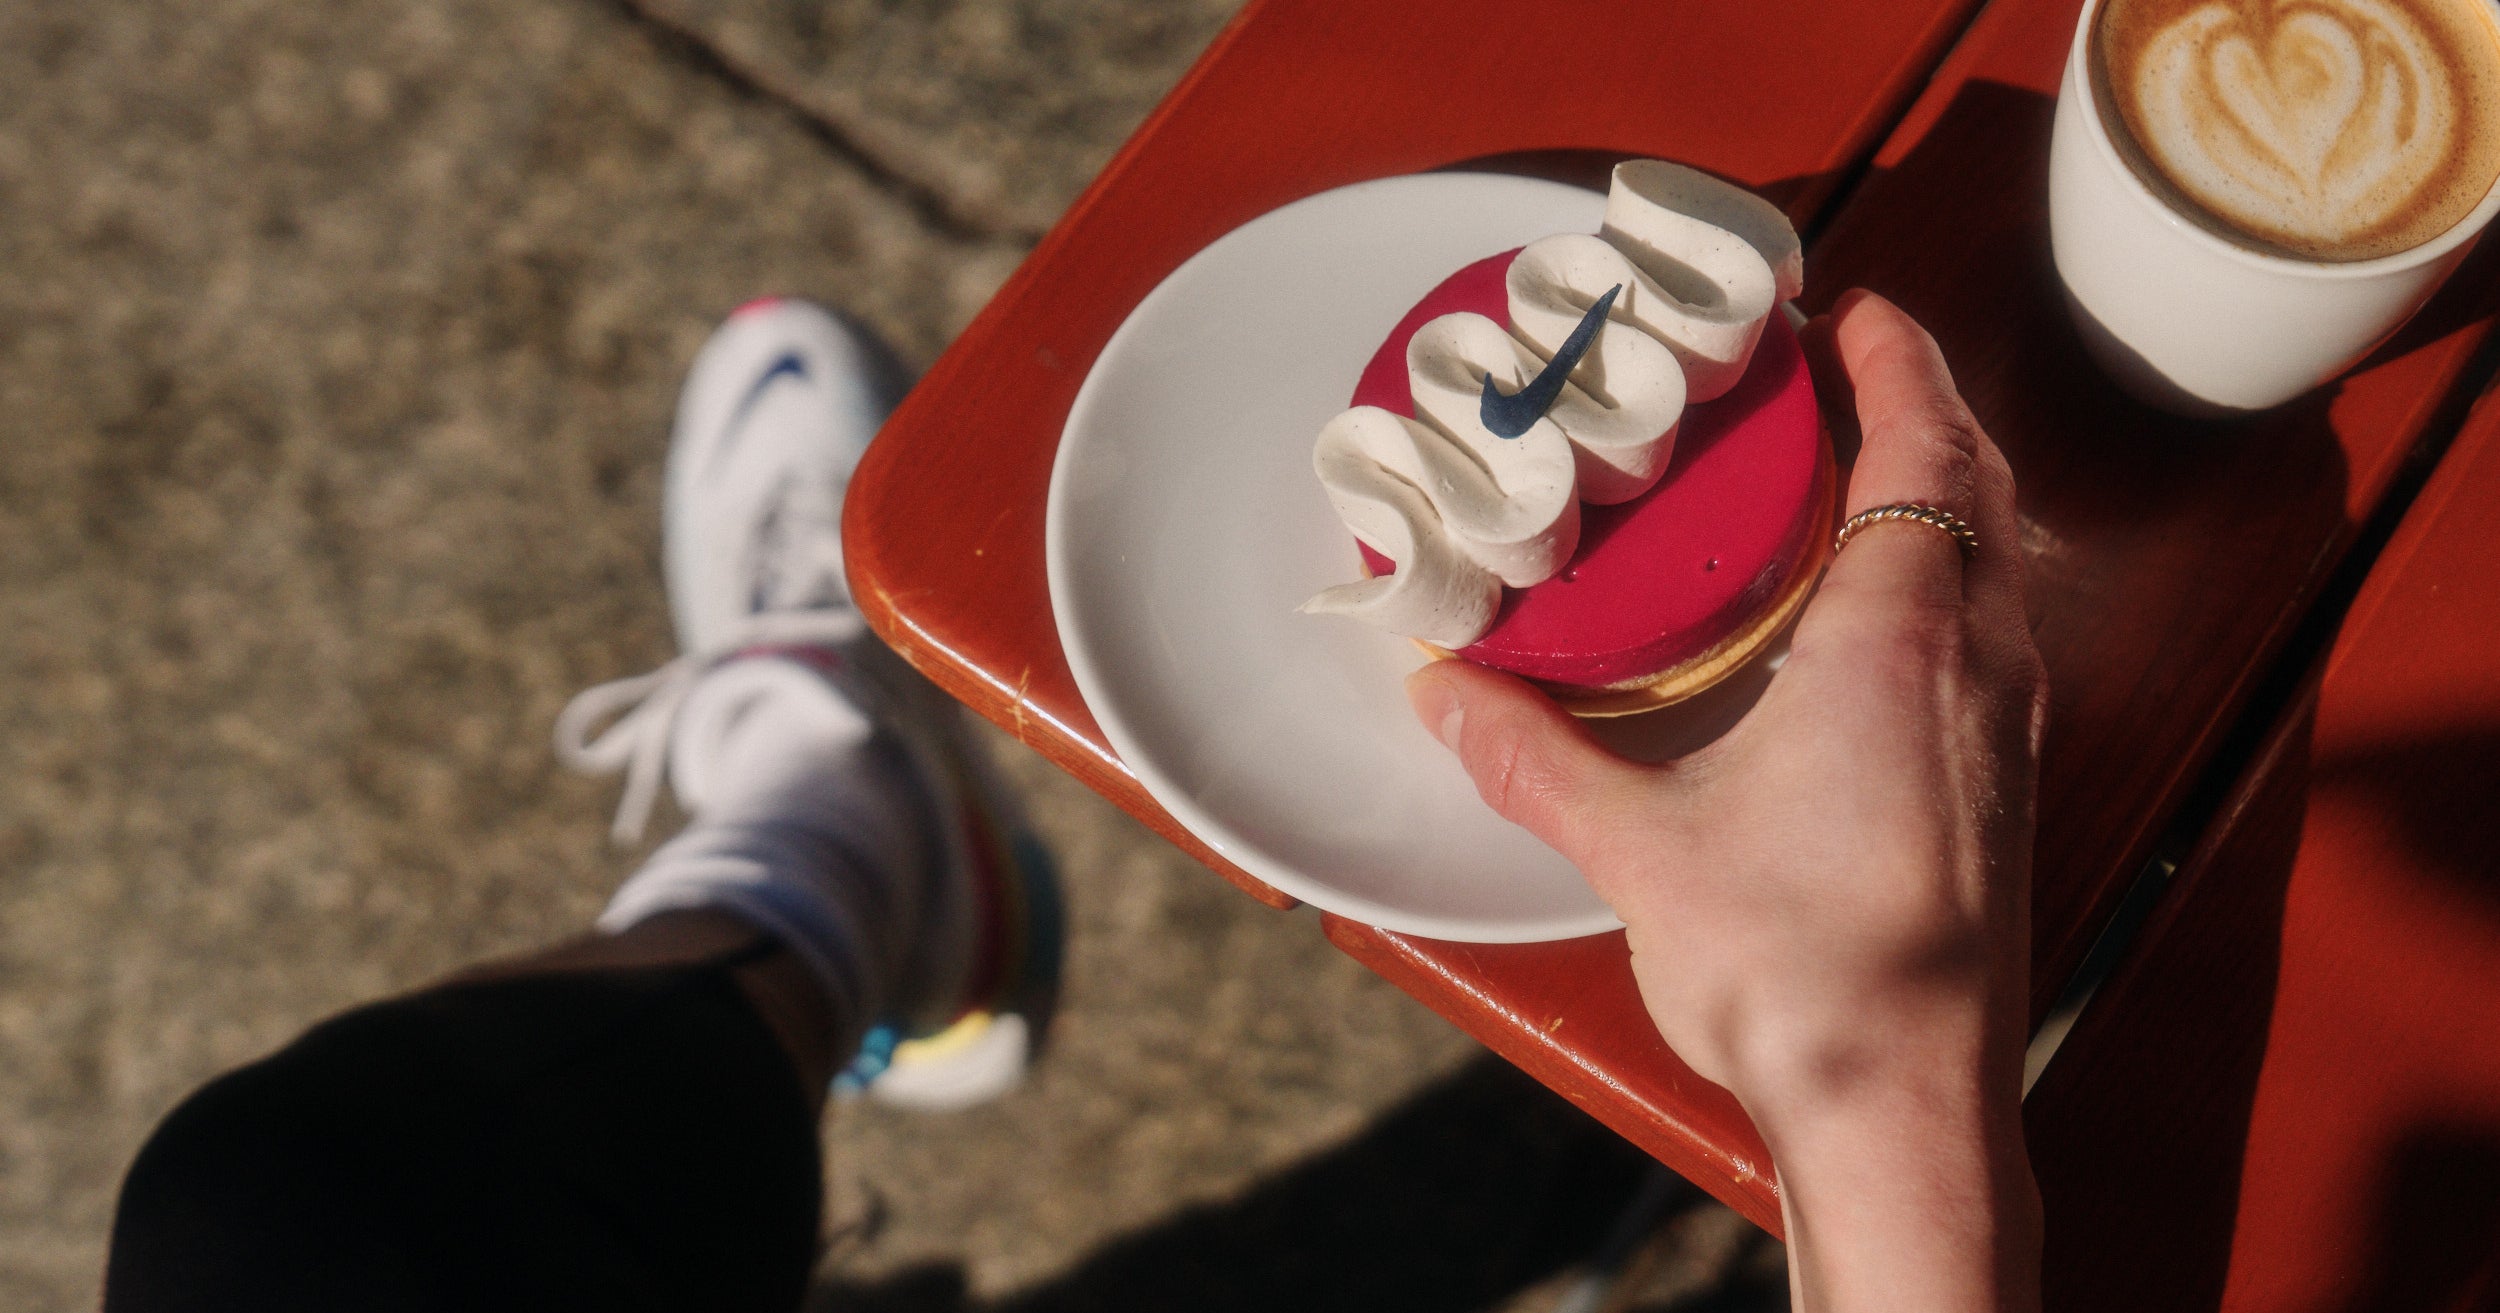 FREA Boulangerie Feiert Den Pastry Run Mit Einer Eigenen Gebäck-Kreation